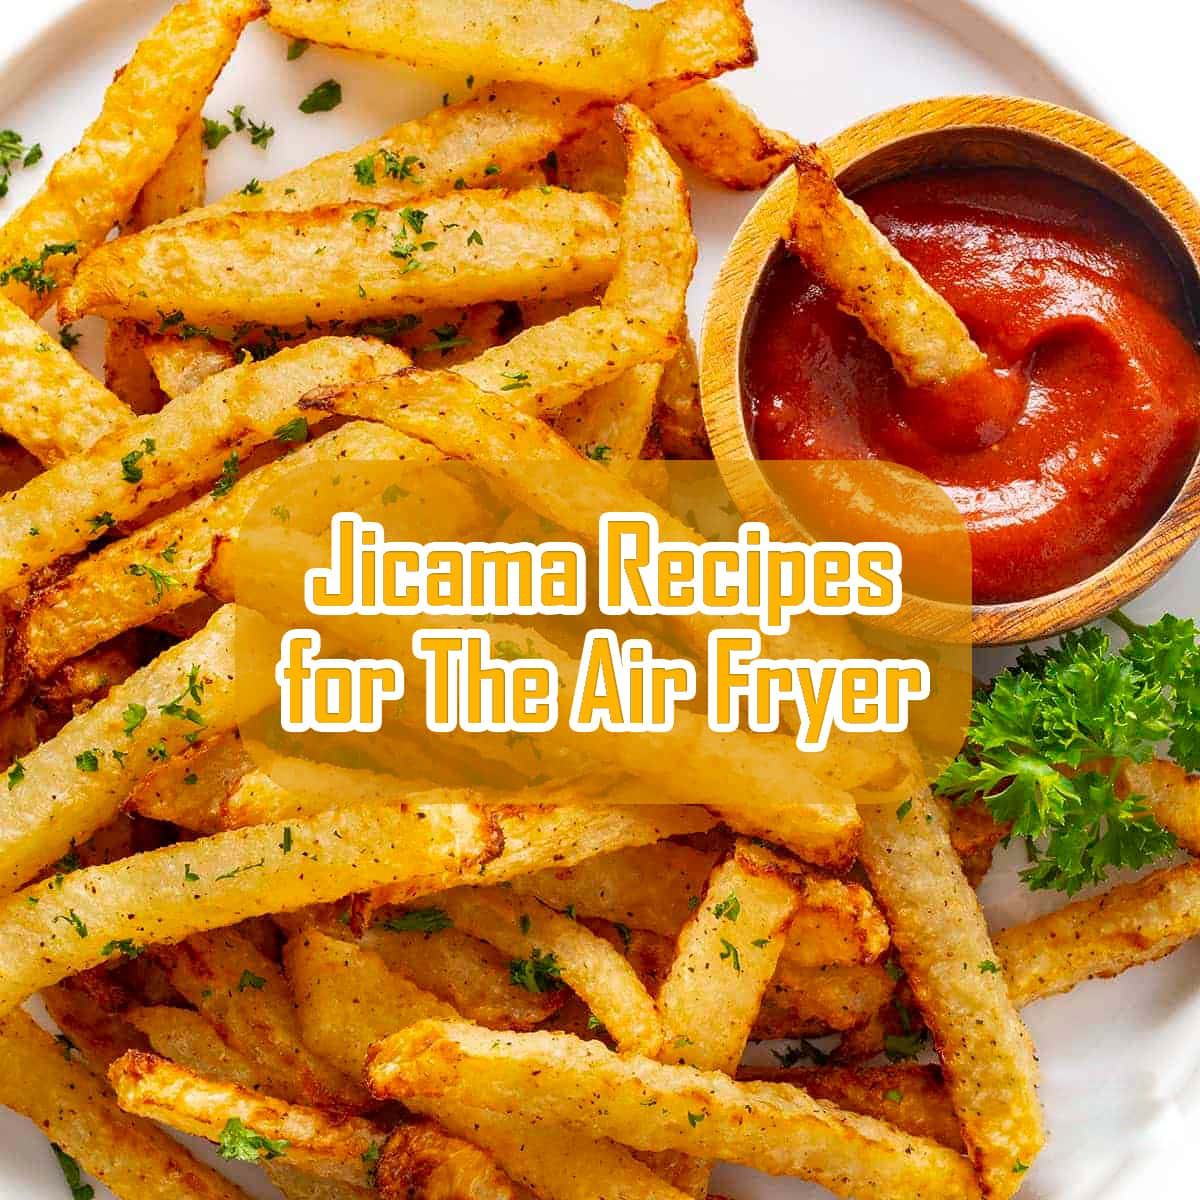 Jicama Recipes for The Air Fryer